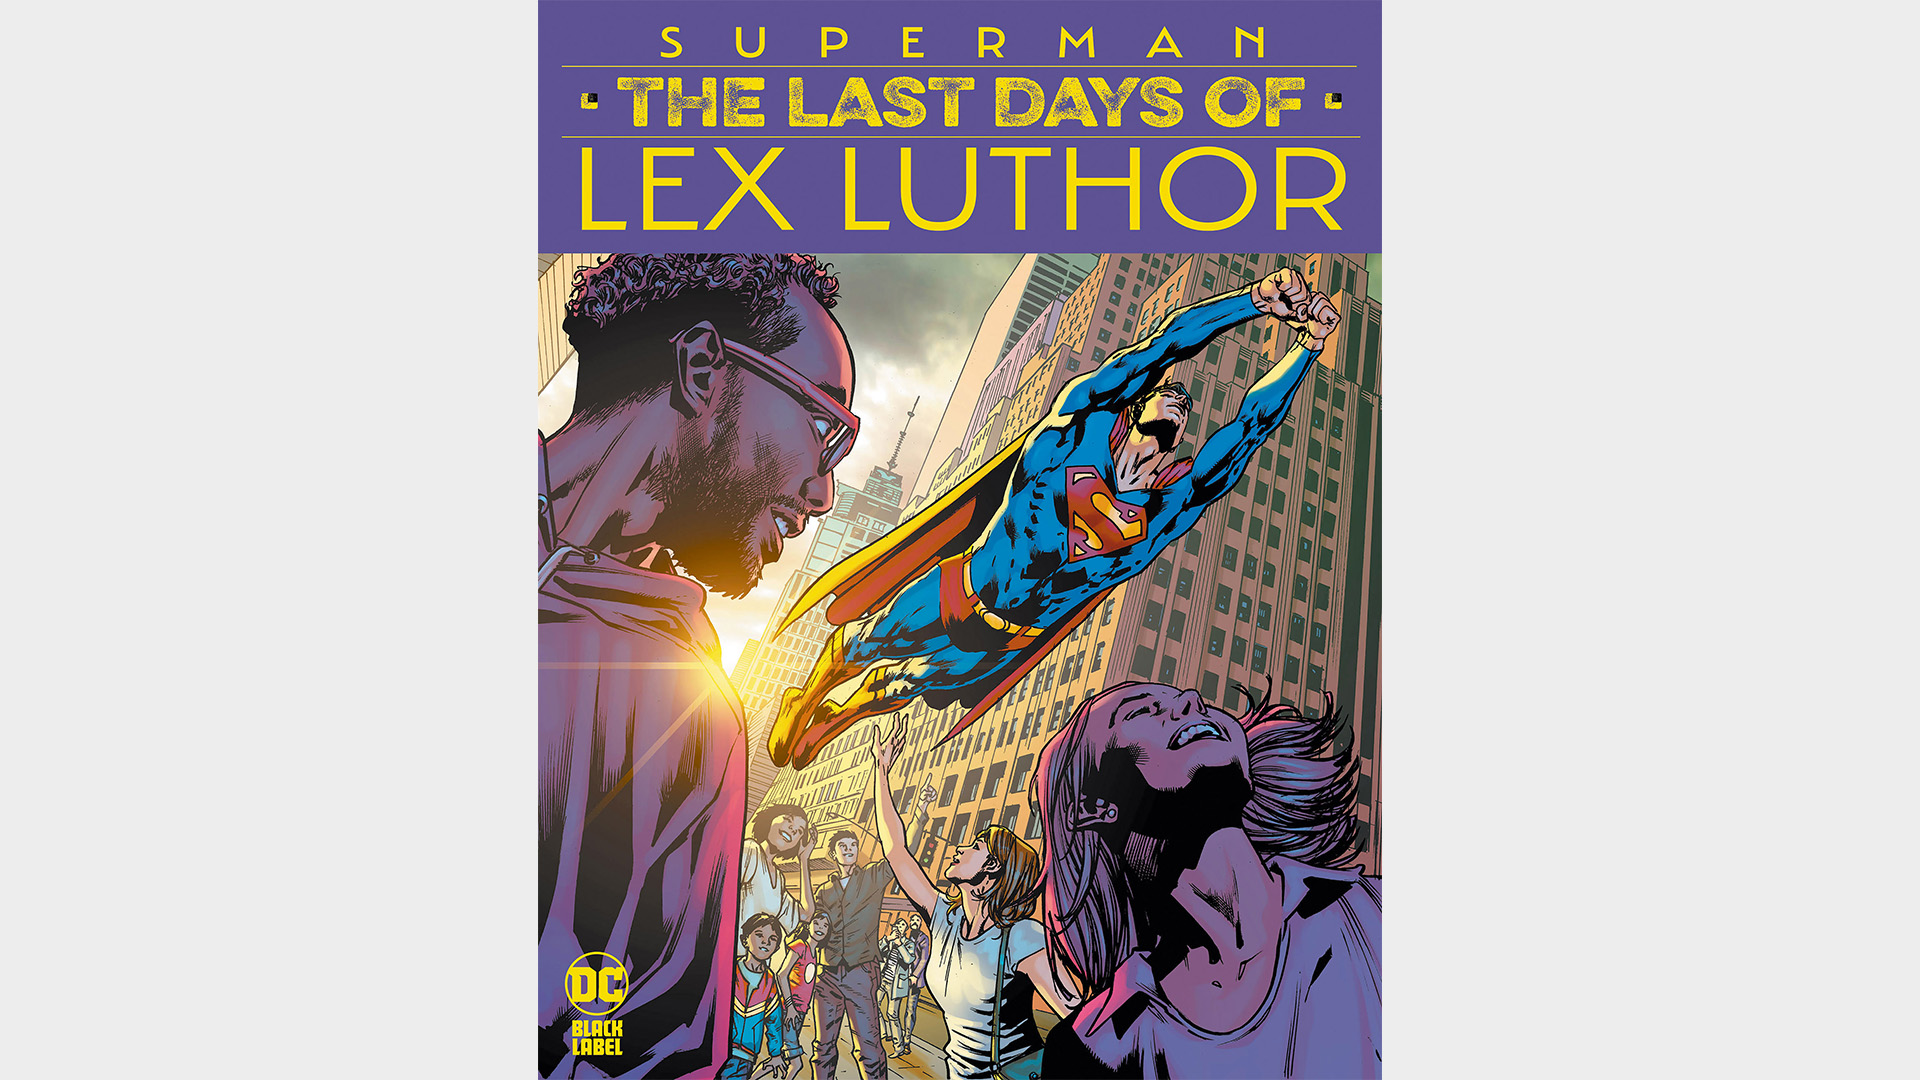 SUPERMAN: THE LAST DAYS OF LEX LUTHOR #2